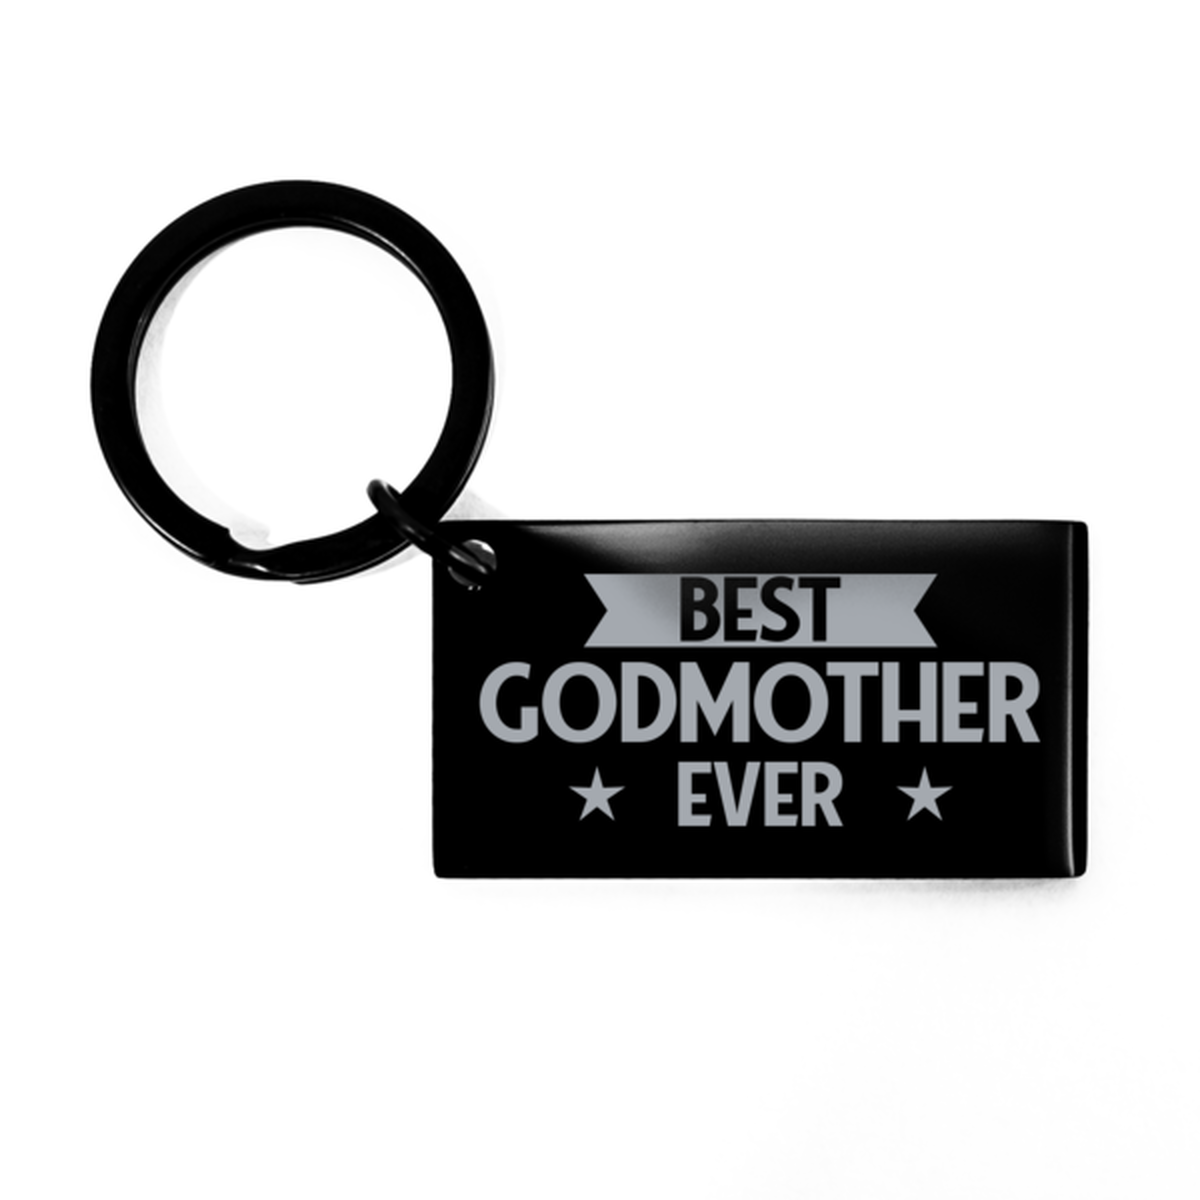 Best Godmother Ever Godmother Gifts, Funny Black Keychain For Godmother, Birthday Engraved Keyring Presents For Women